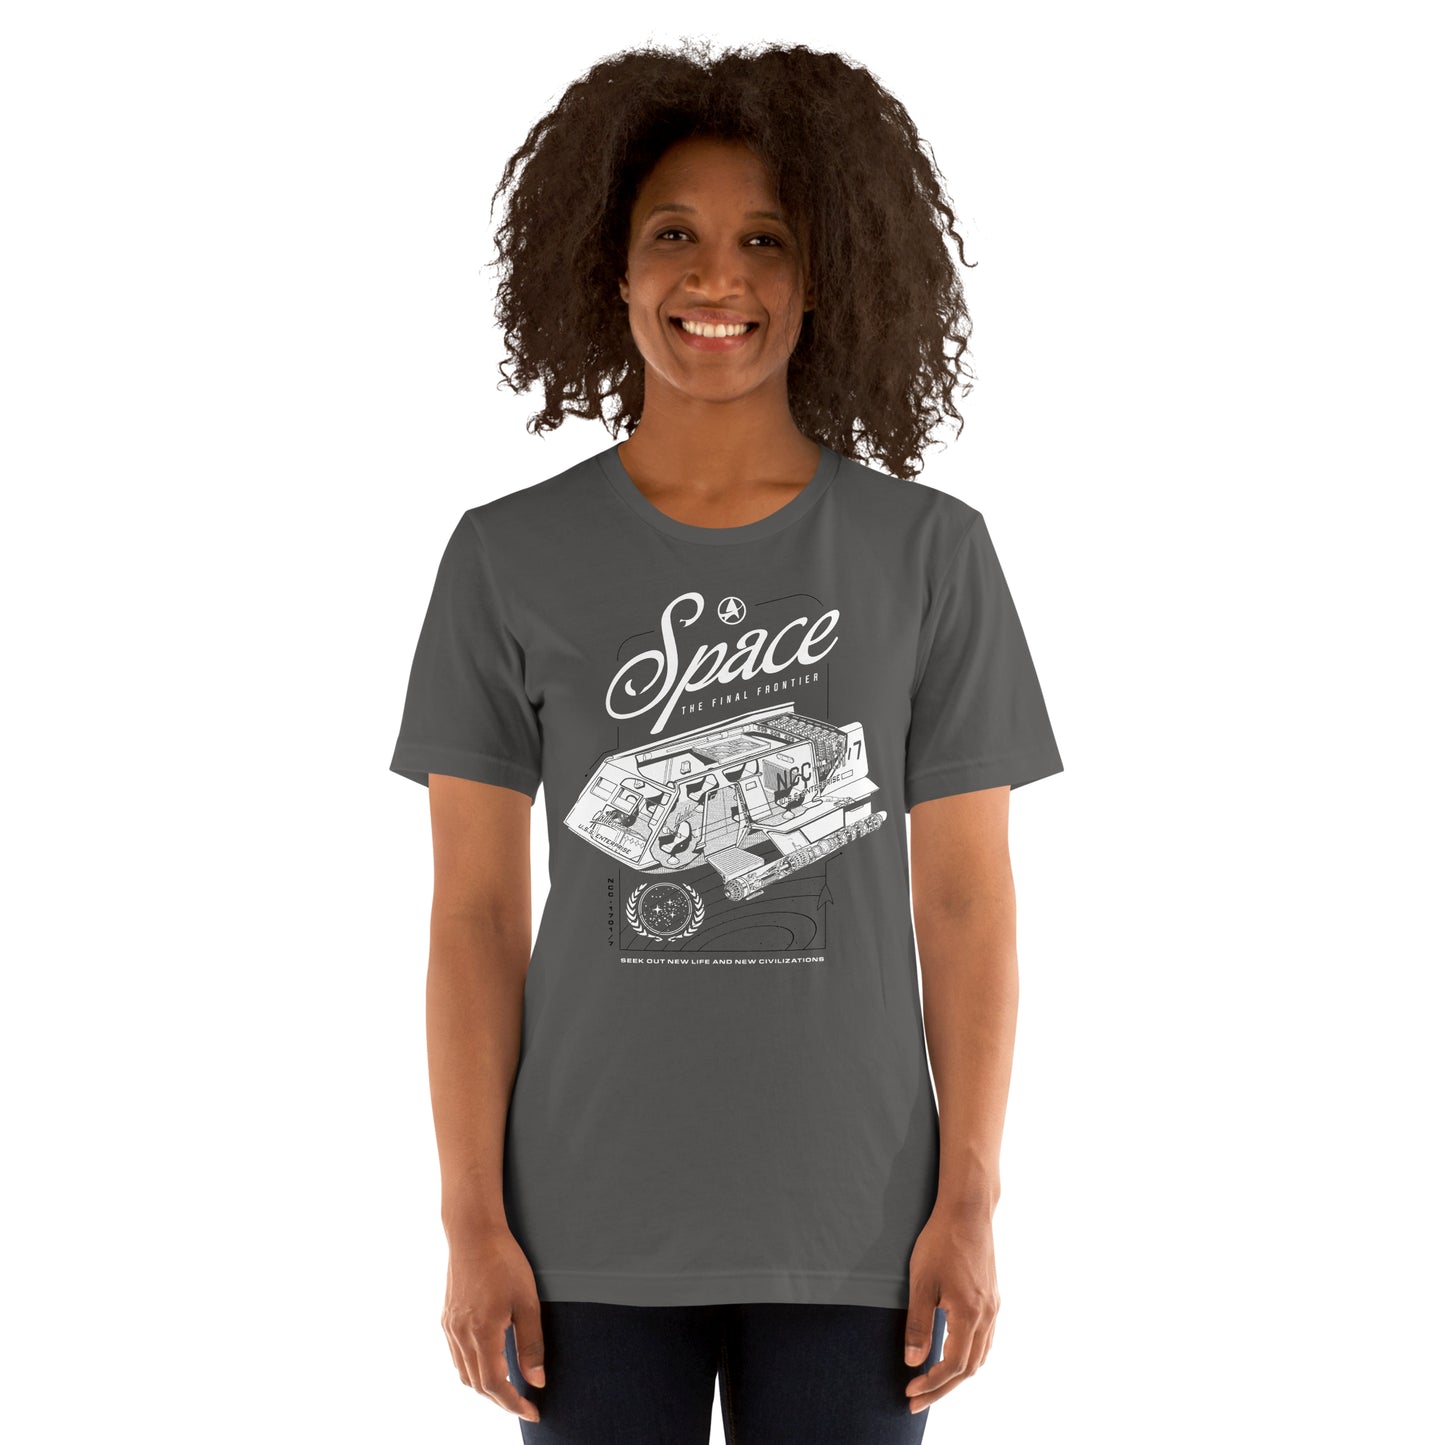 Star Trek Espacio Adultos Camiseta